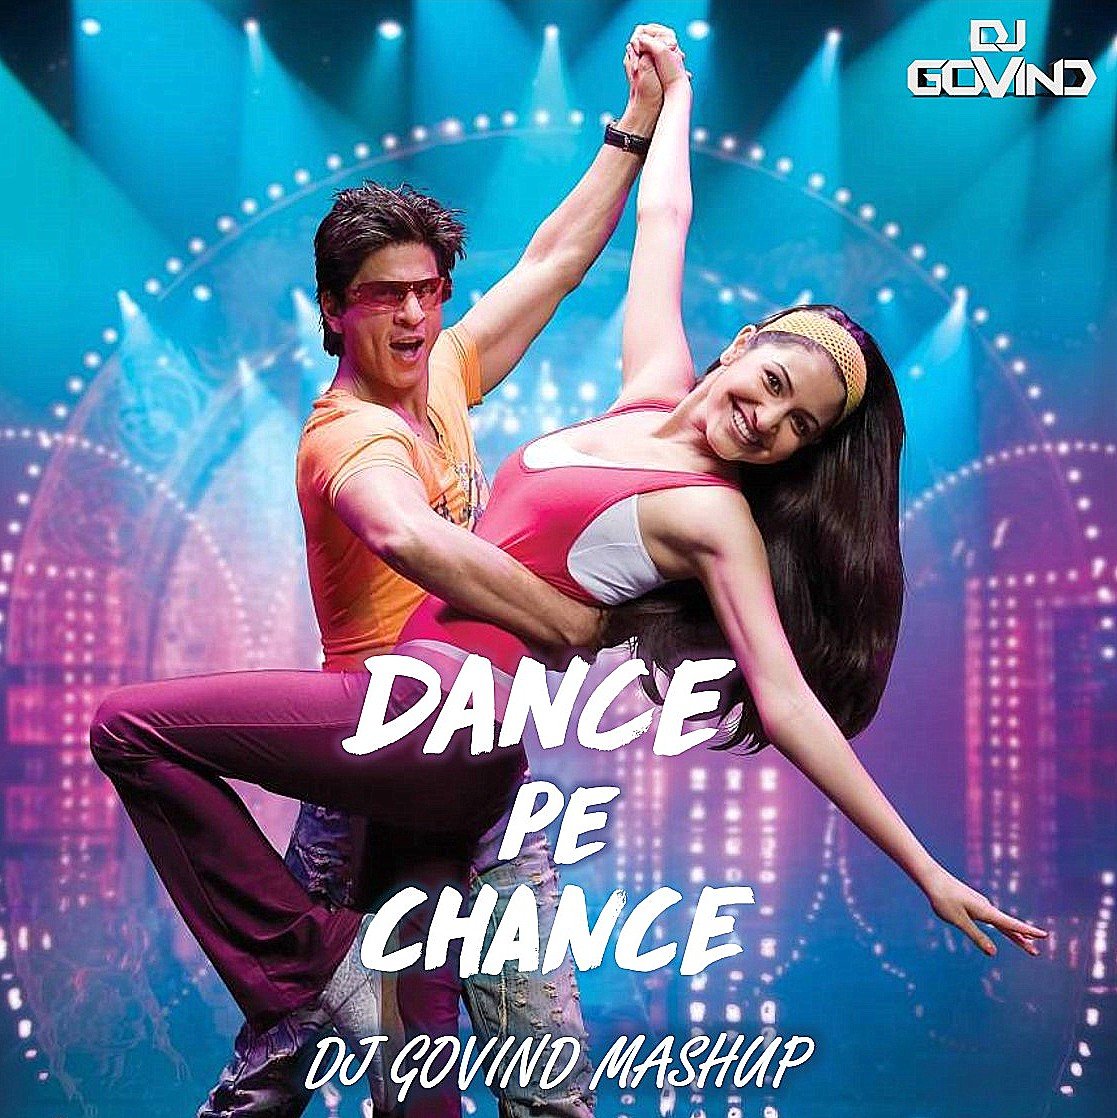 Dance Pe Chance (Festival Mashup) -  DJ Govind